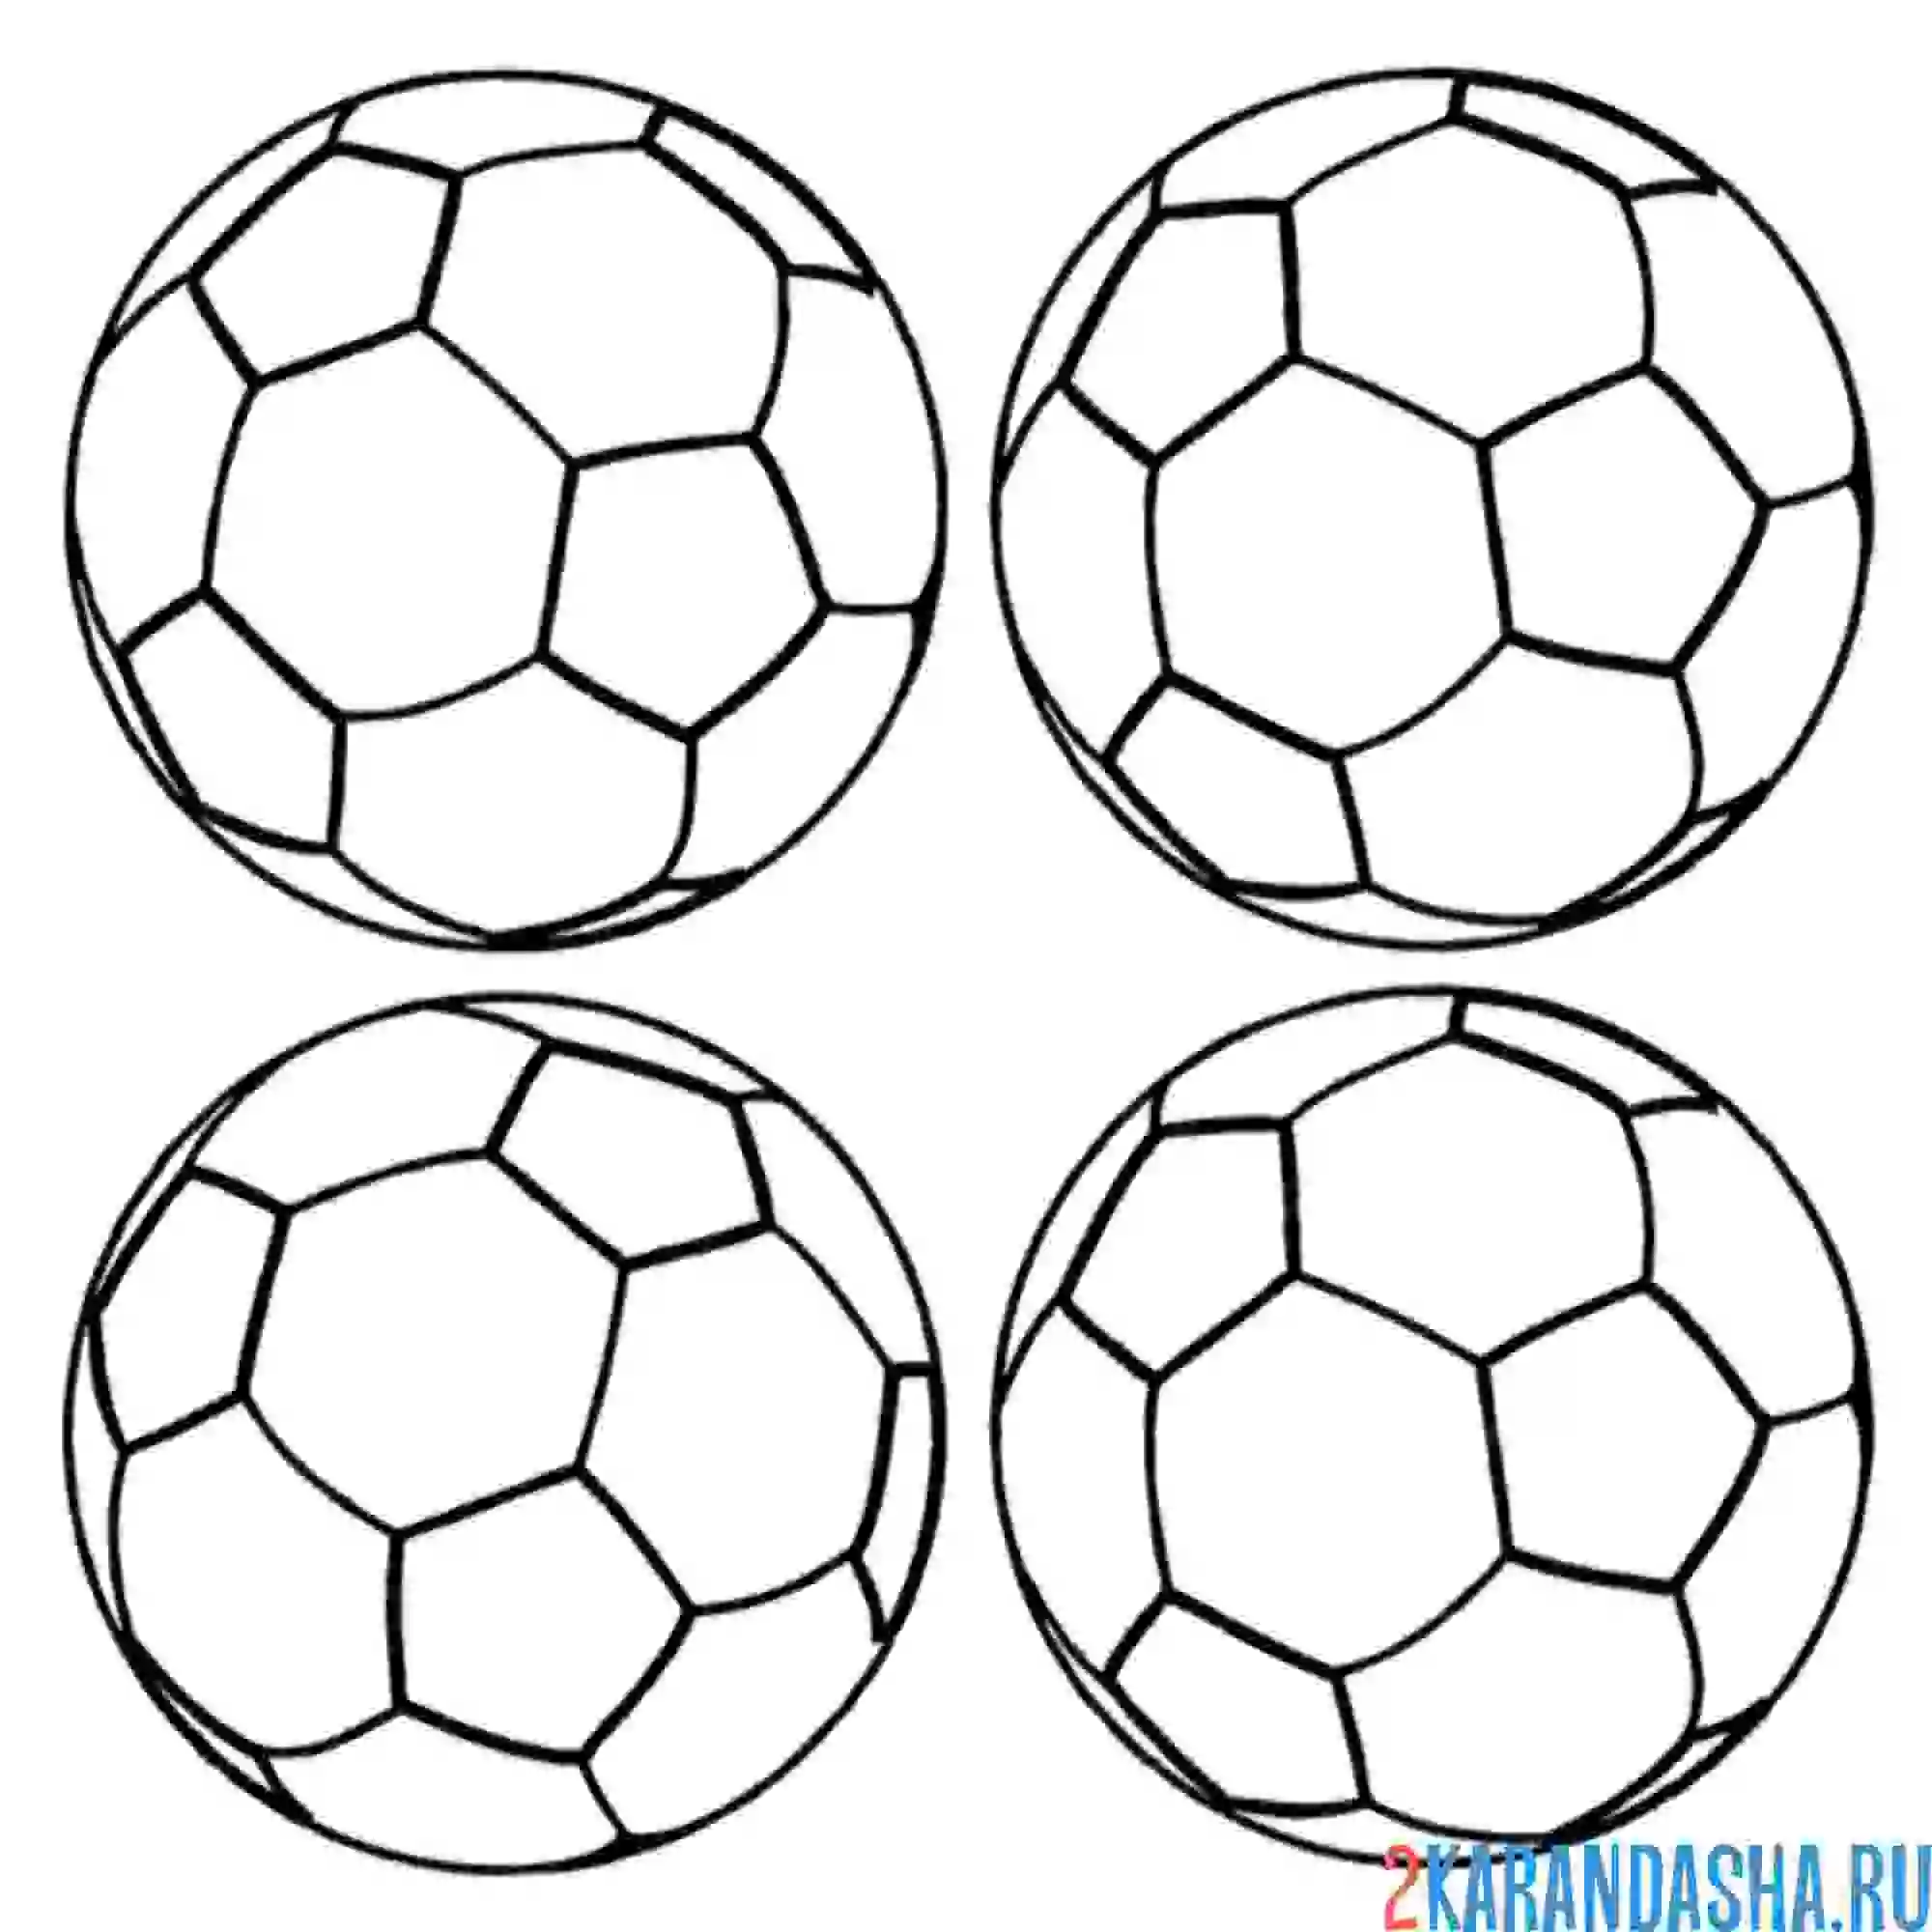 Раскраска четыре футбольных мяча